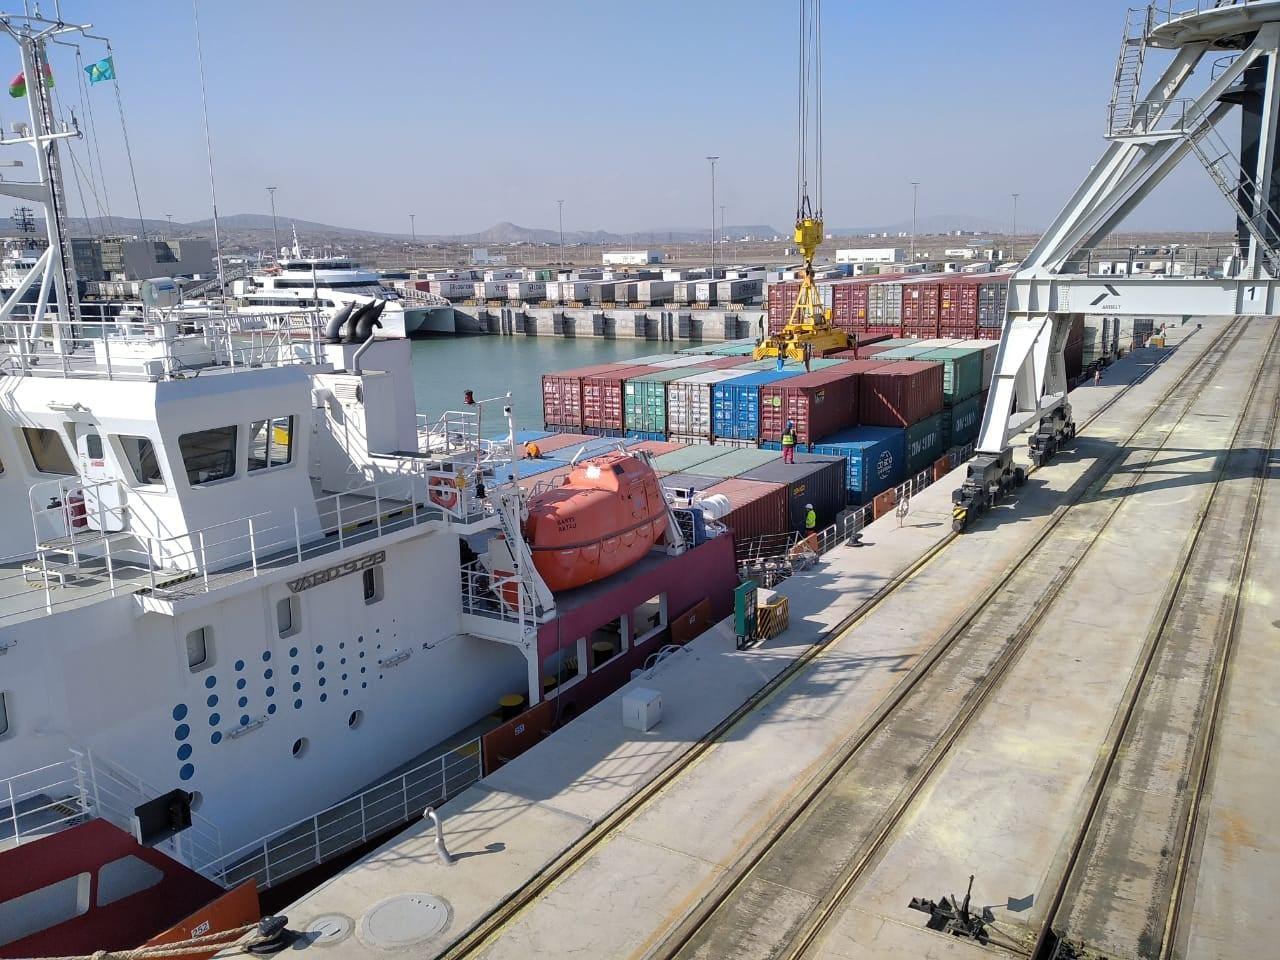 Kazakhstan’s Barys deck cargo ship returns from Baku to home port